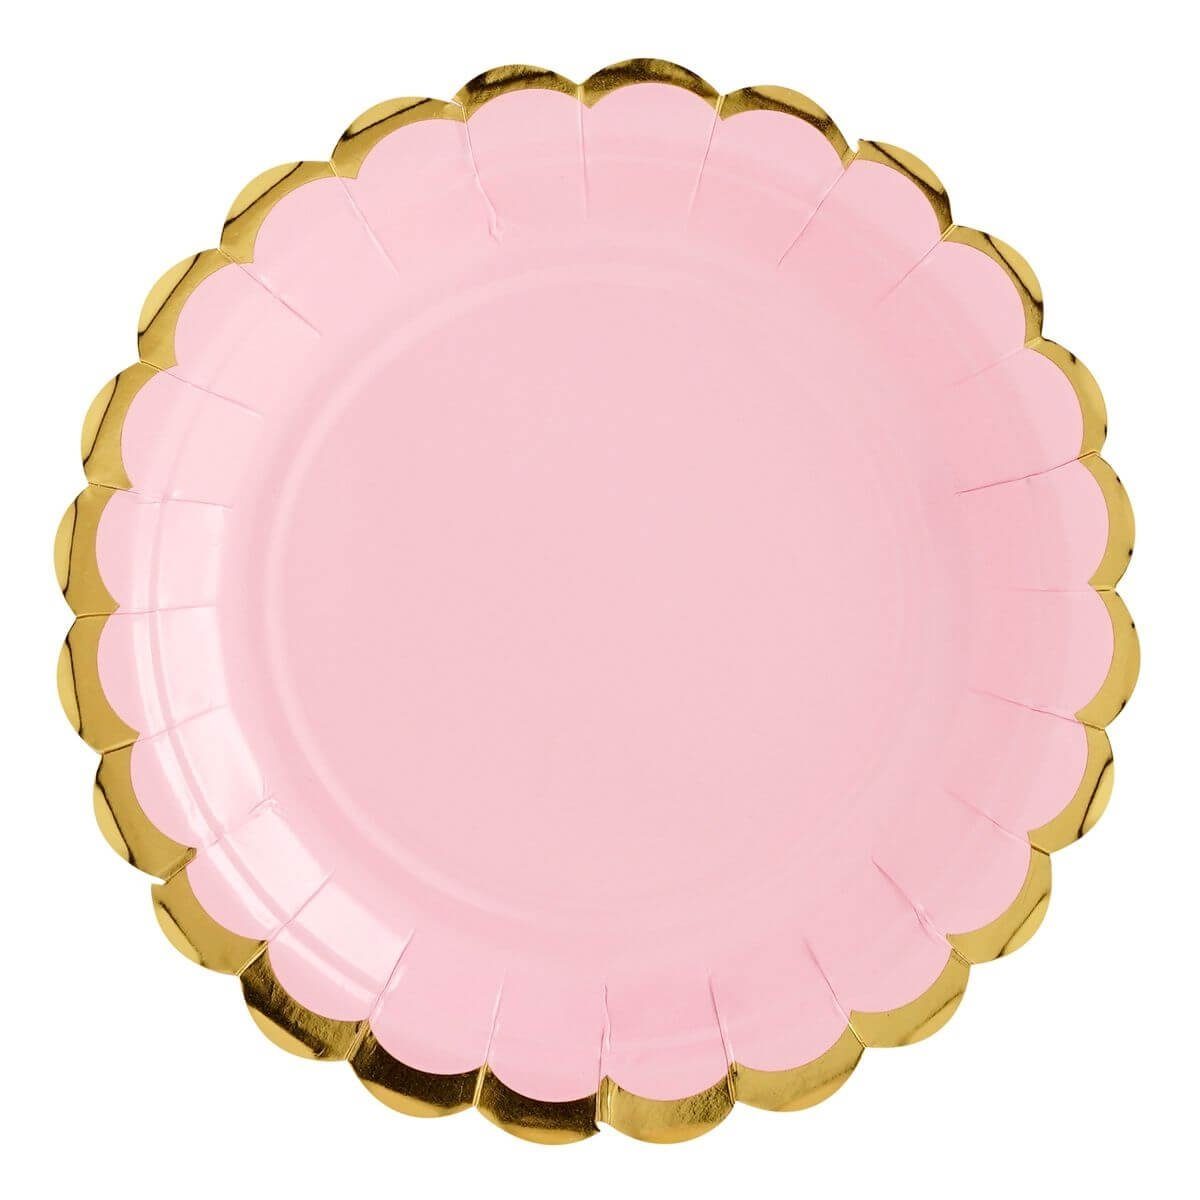 Kiids Pappteller Teller pastell rosa, Folienbeschichtet, 17,8 cm | Einwegteller